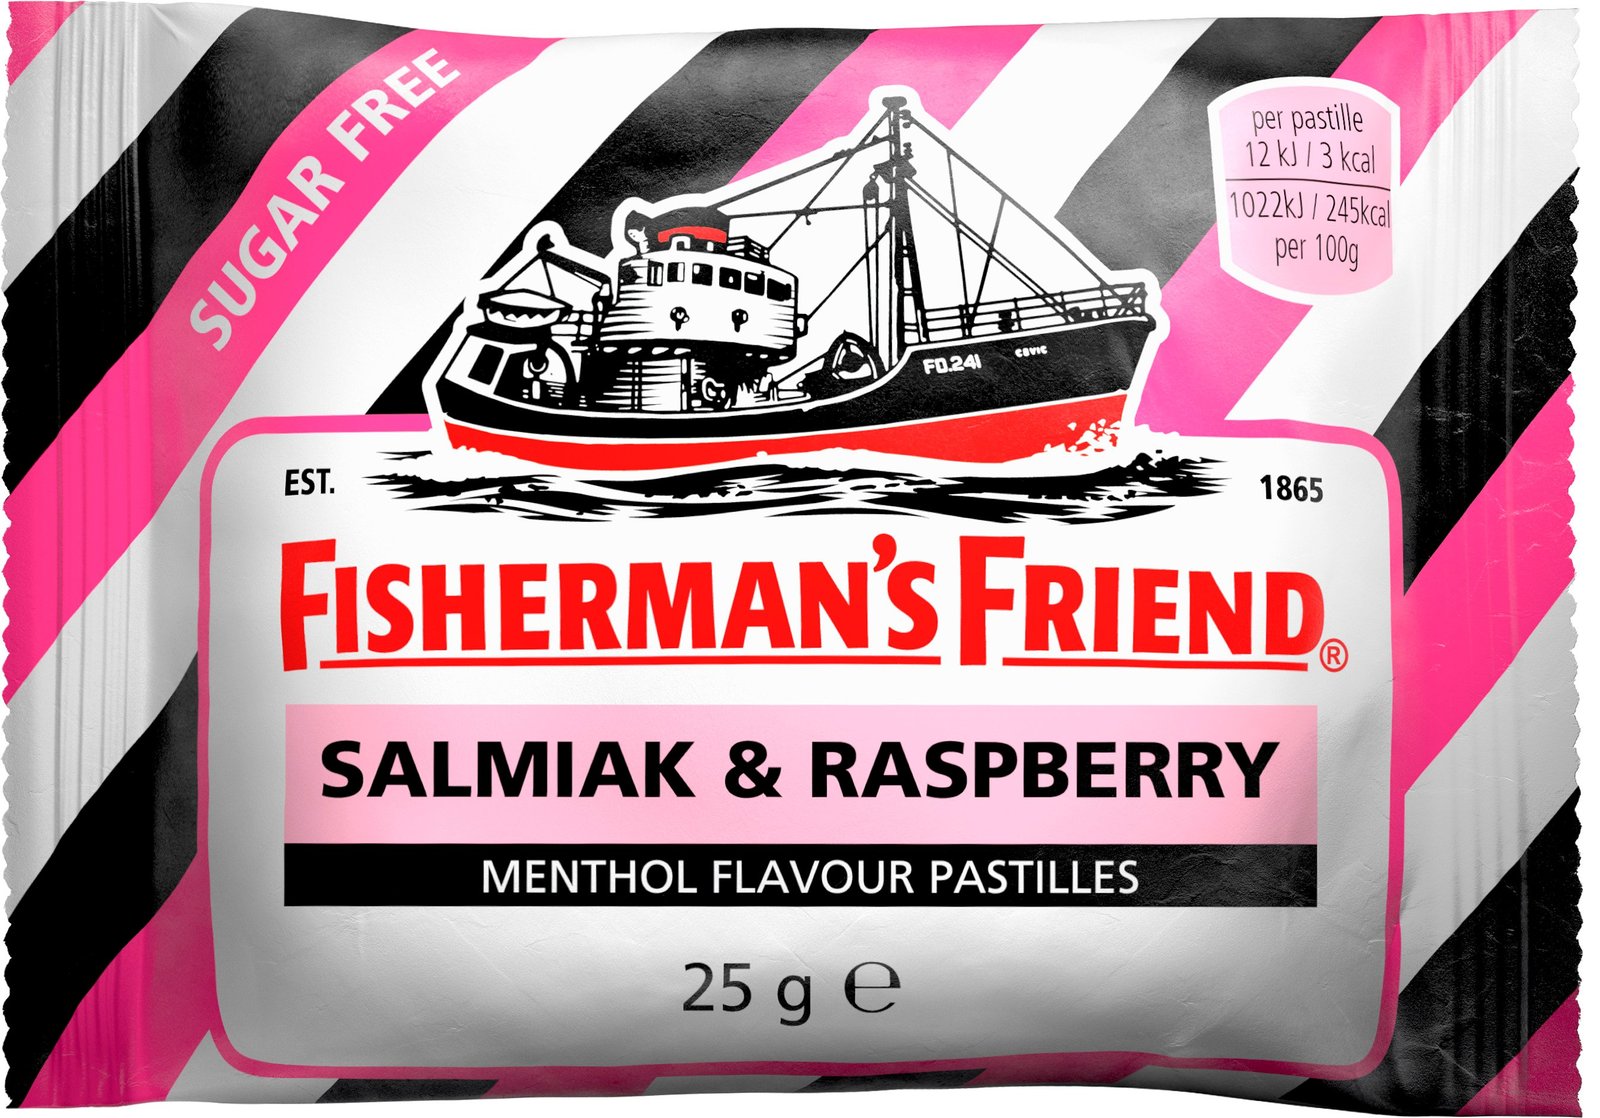 Fisherman's Friend Salmiak & Raspberry 25g